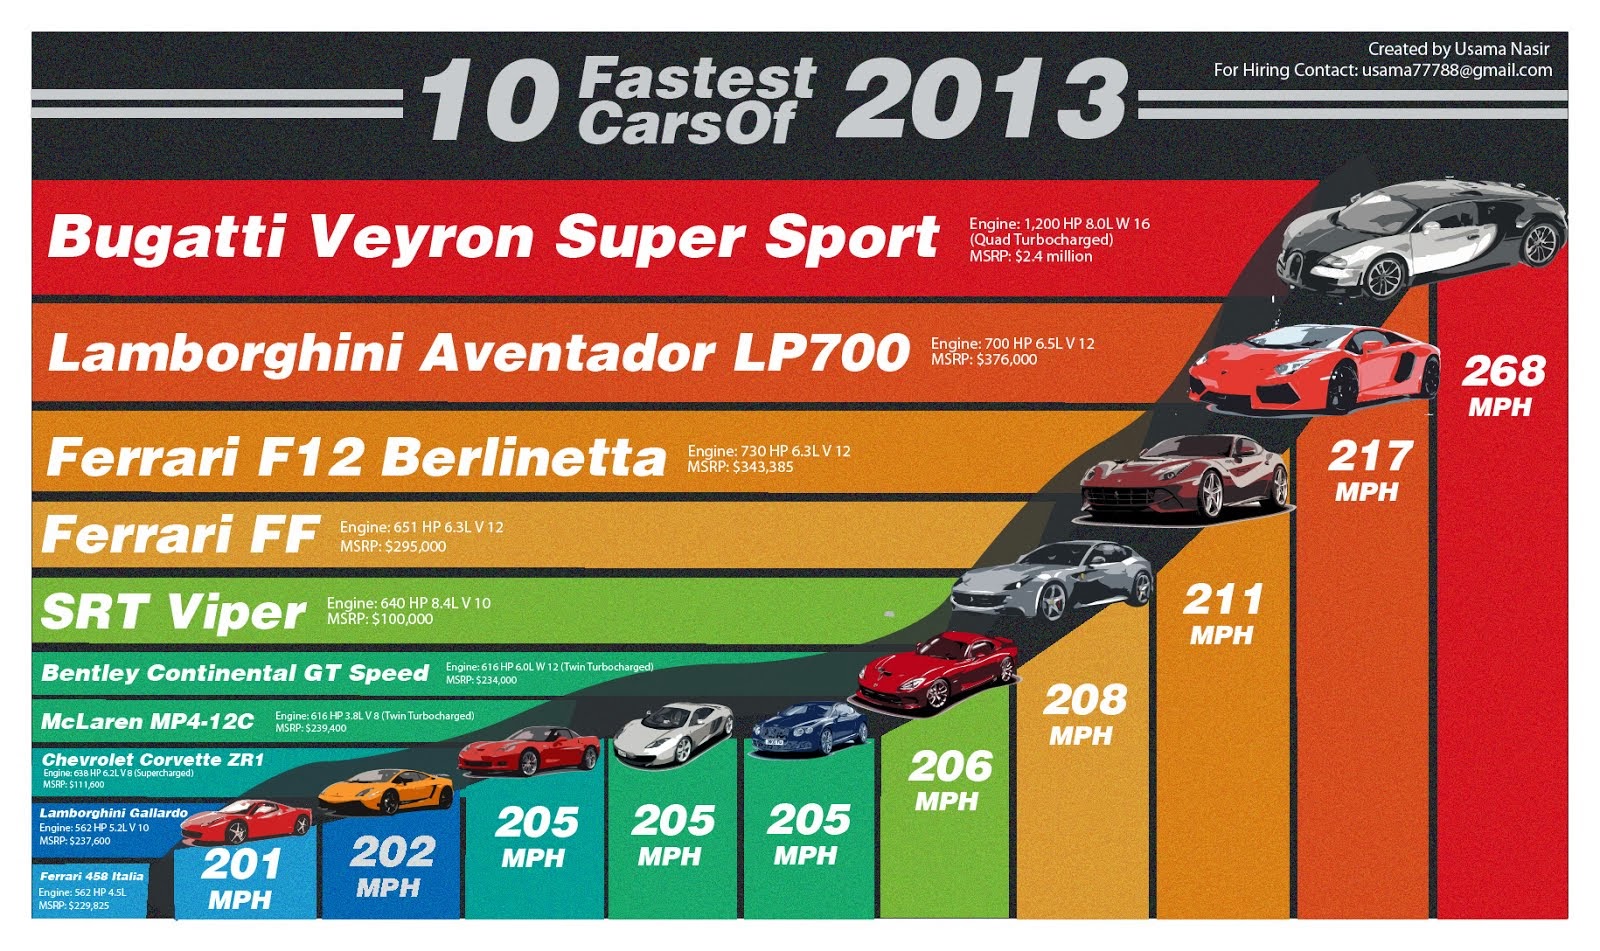 2013 Ten Fastest Car in the World .